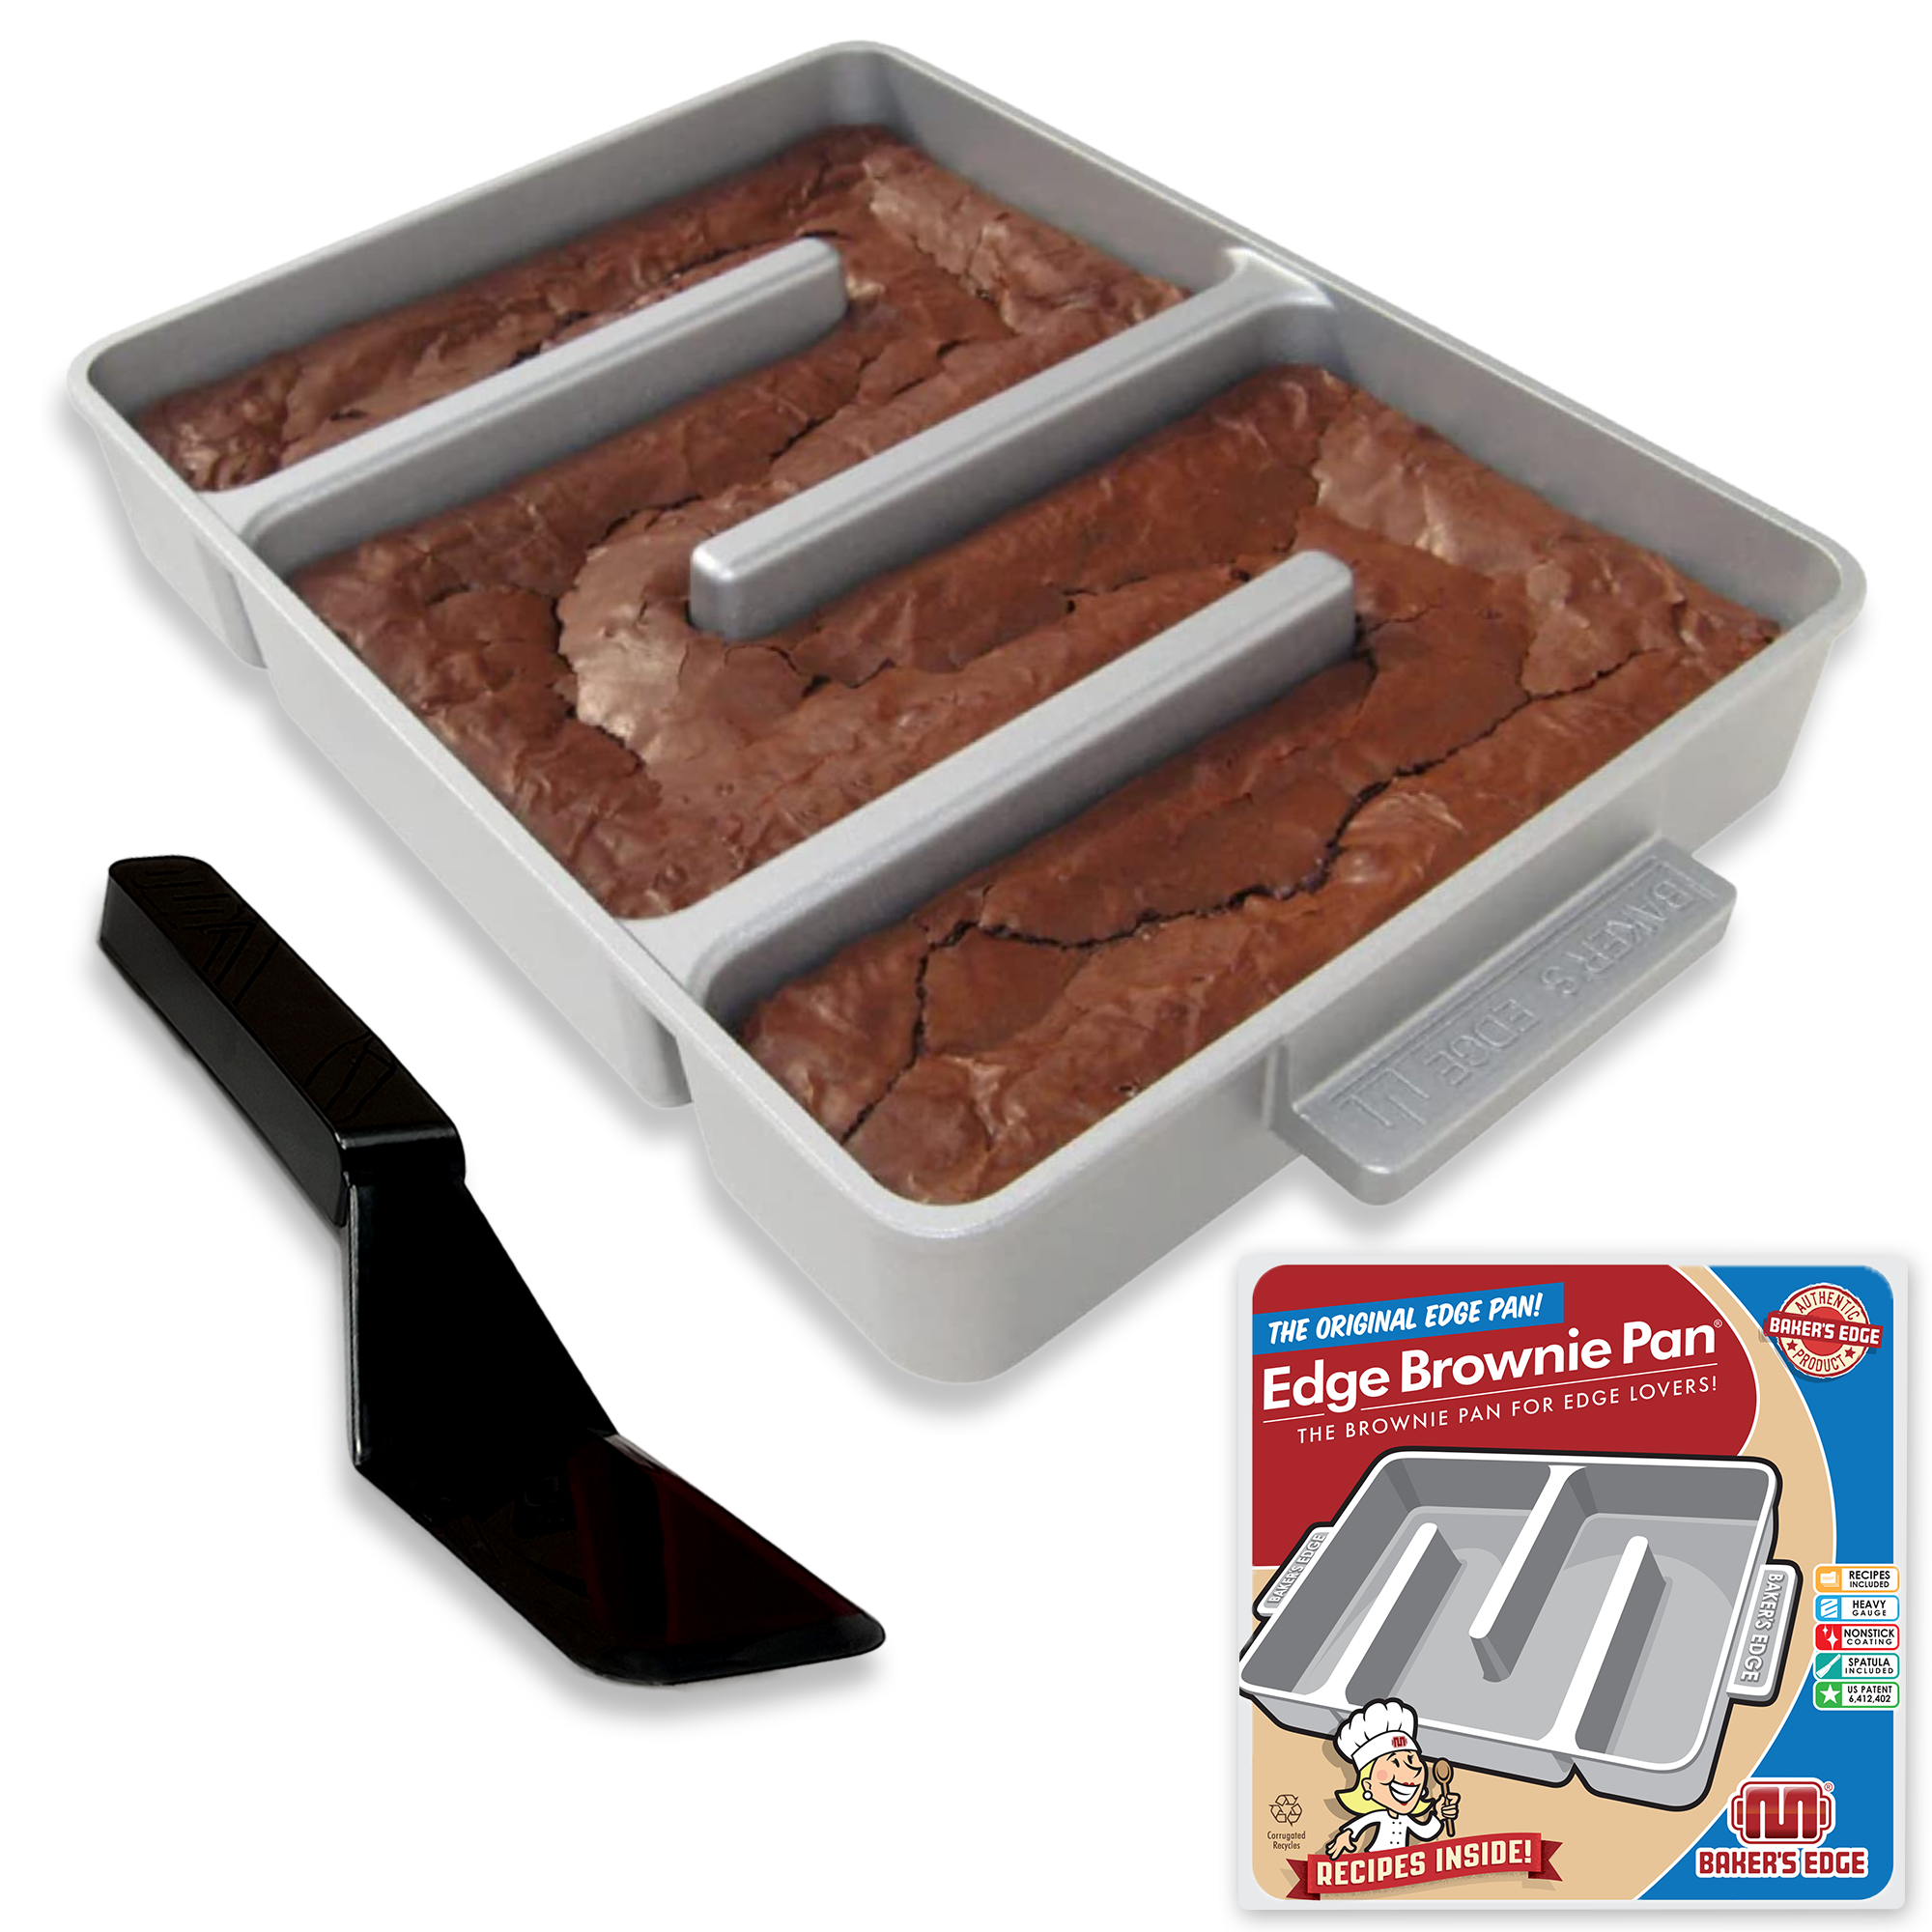 Baker's Edge Brownie Pan - The Original All Edges Brownie Pan for Baking - image 1 of 10